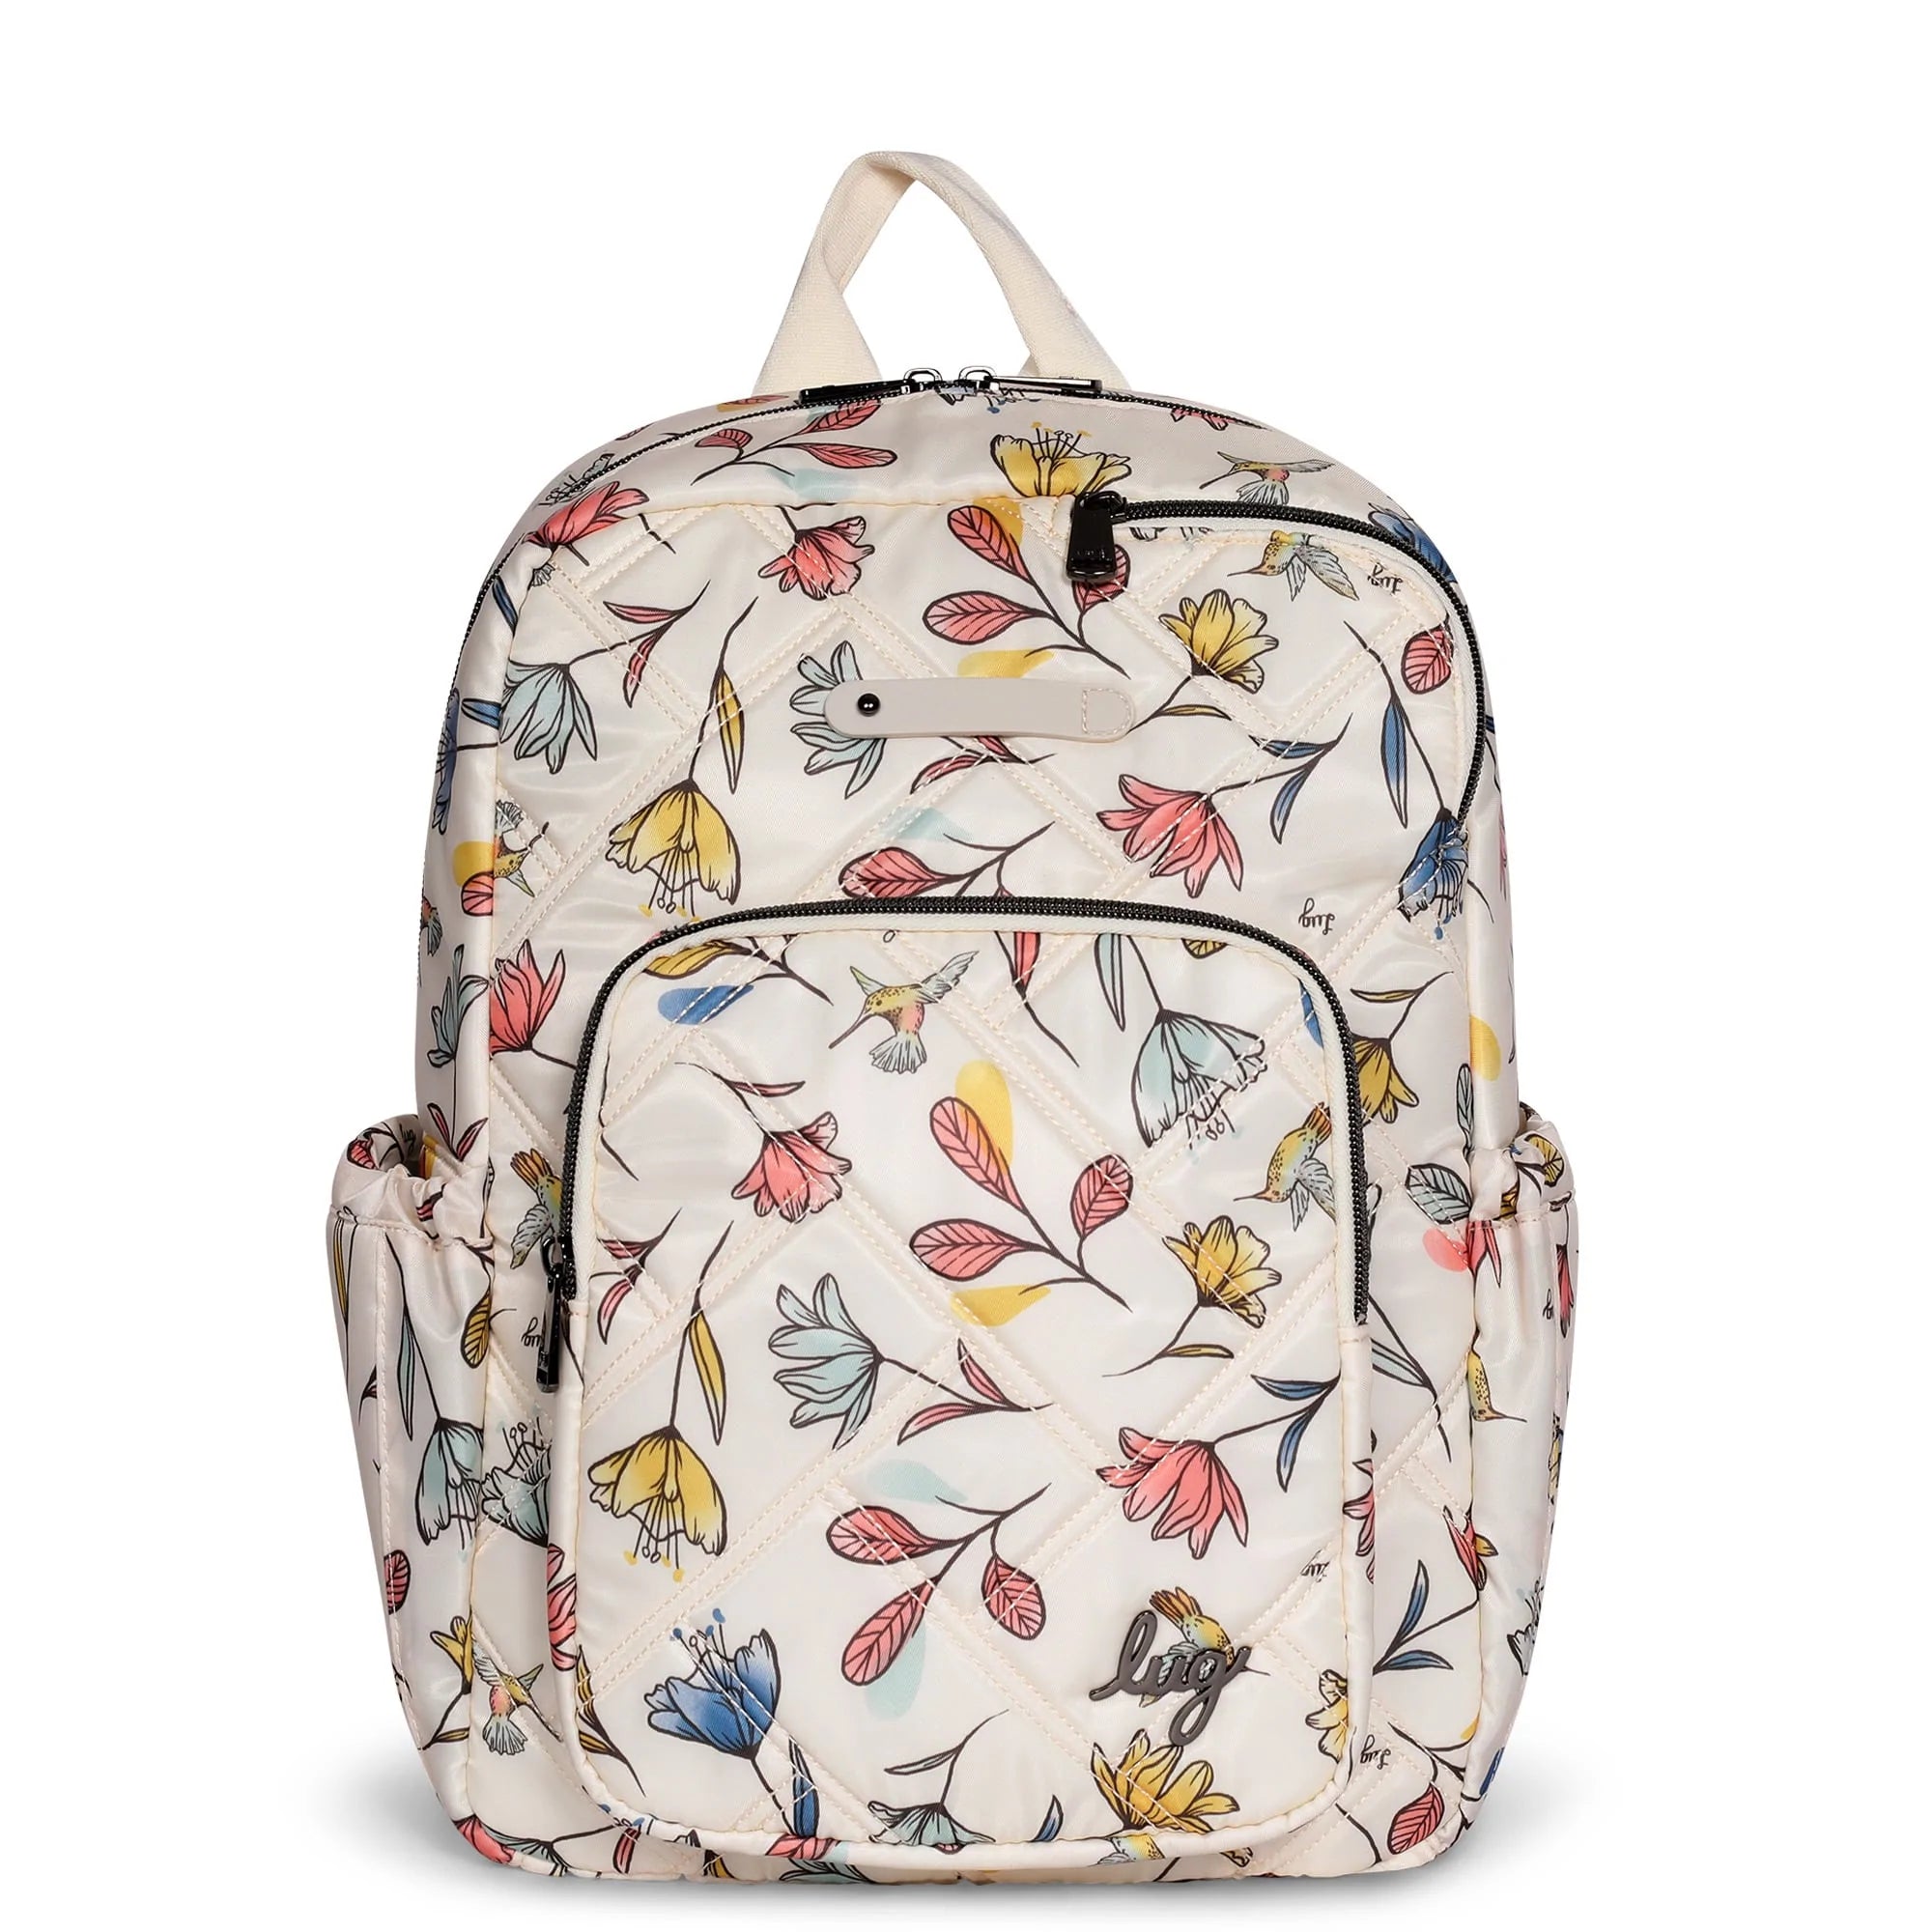 Roadster Backpack- Hummingbird Floral